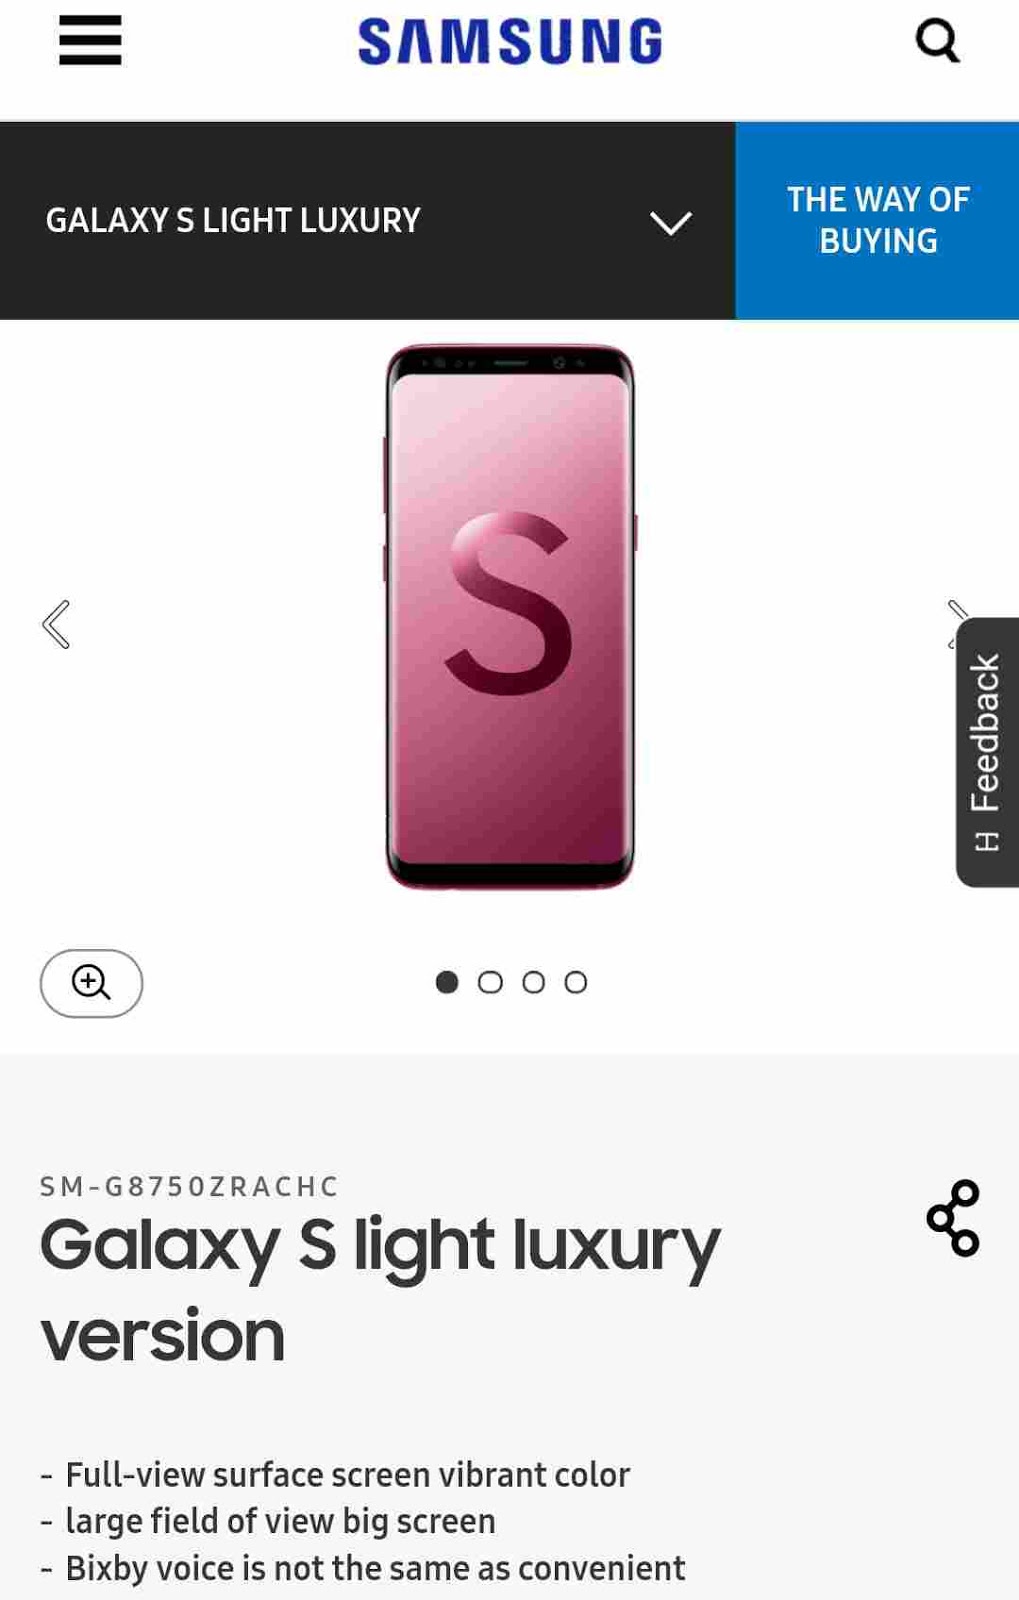 Samsung Galaxy S8 Lite Luxury Confirmed From Samsung's Website